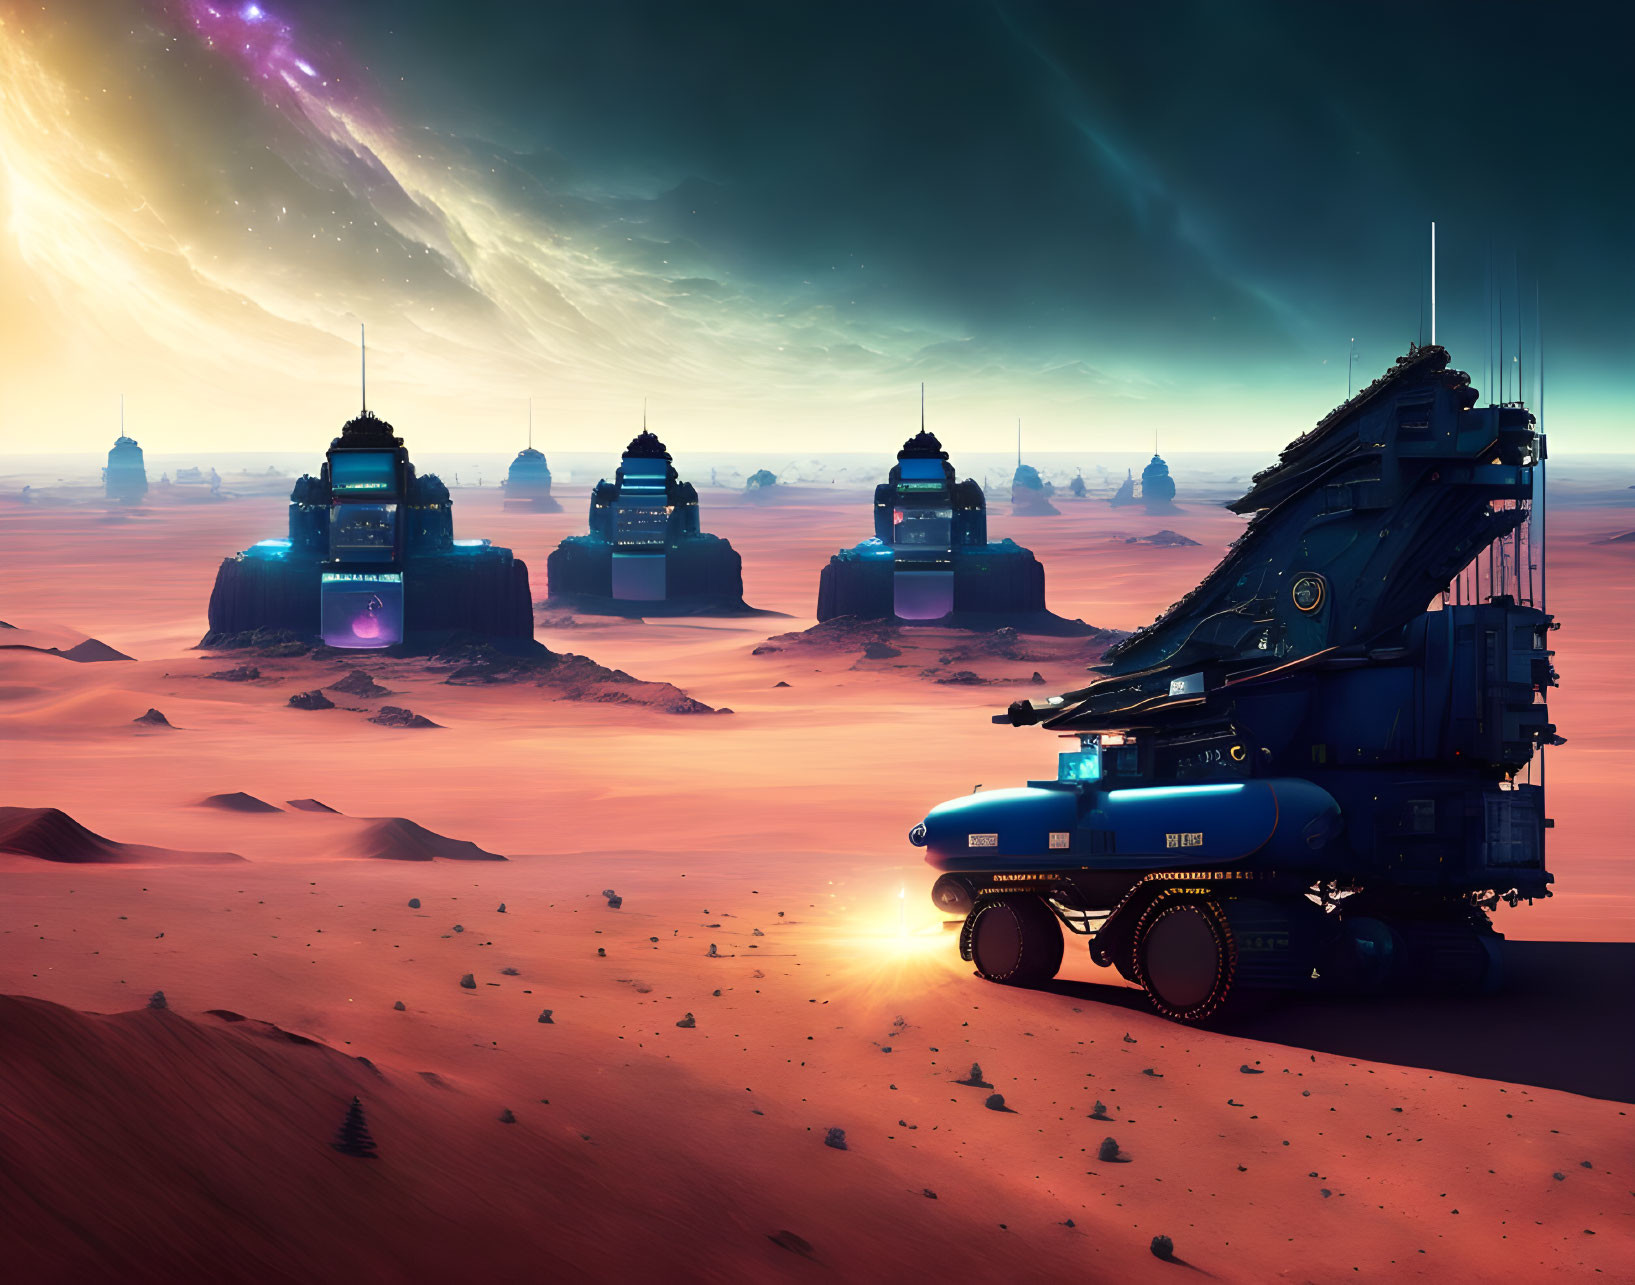 Futuristic vehicles in alien desert under starry sky with cosmic phenomenon